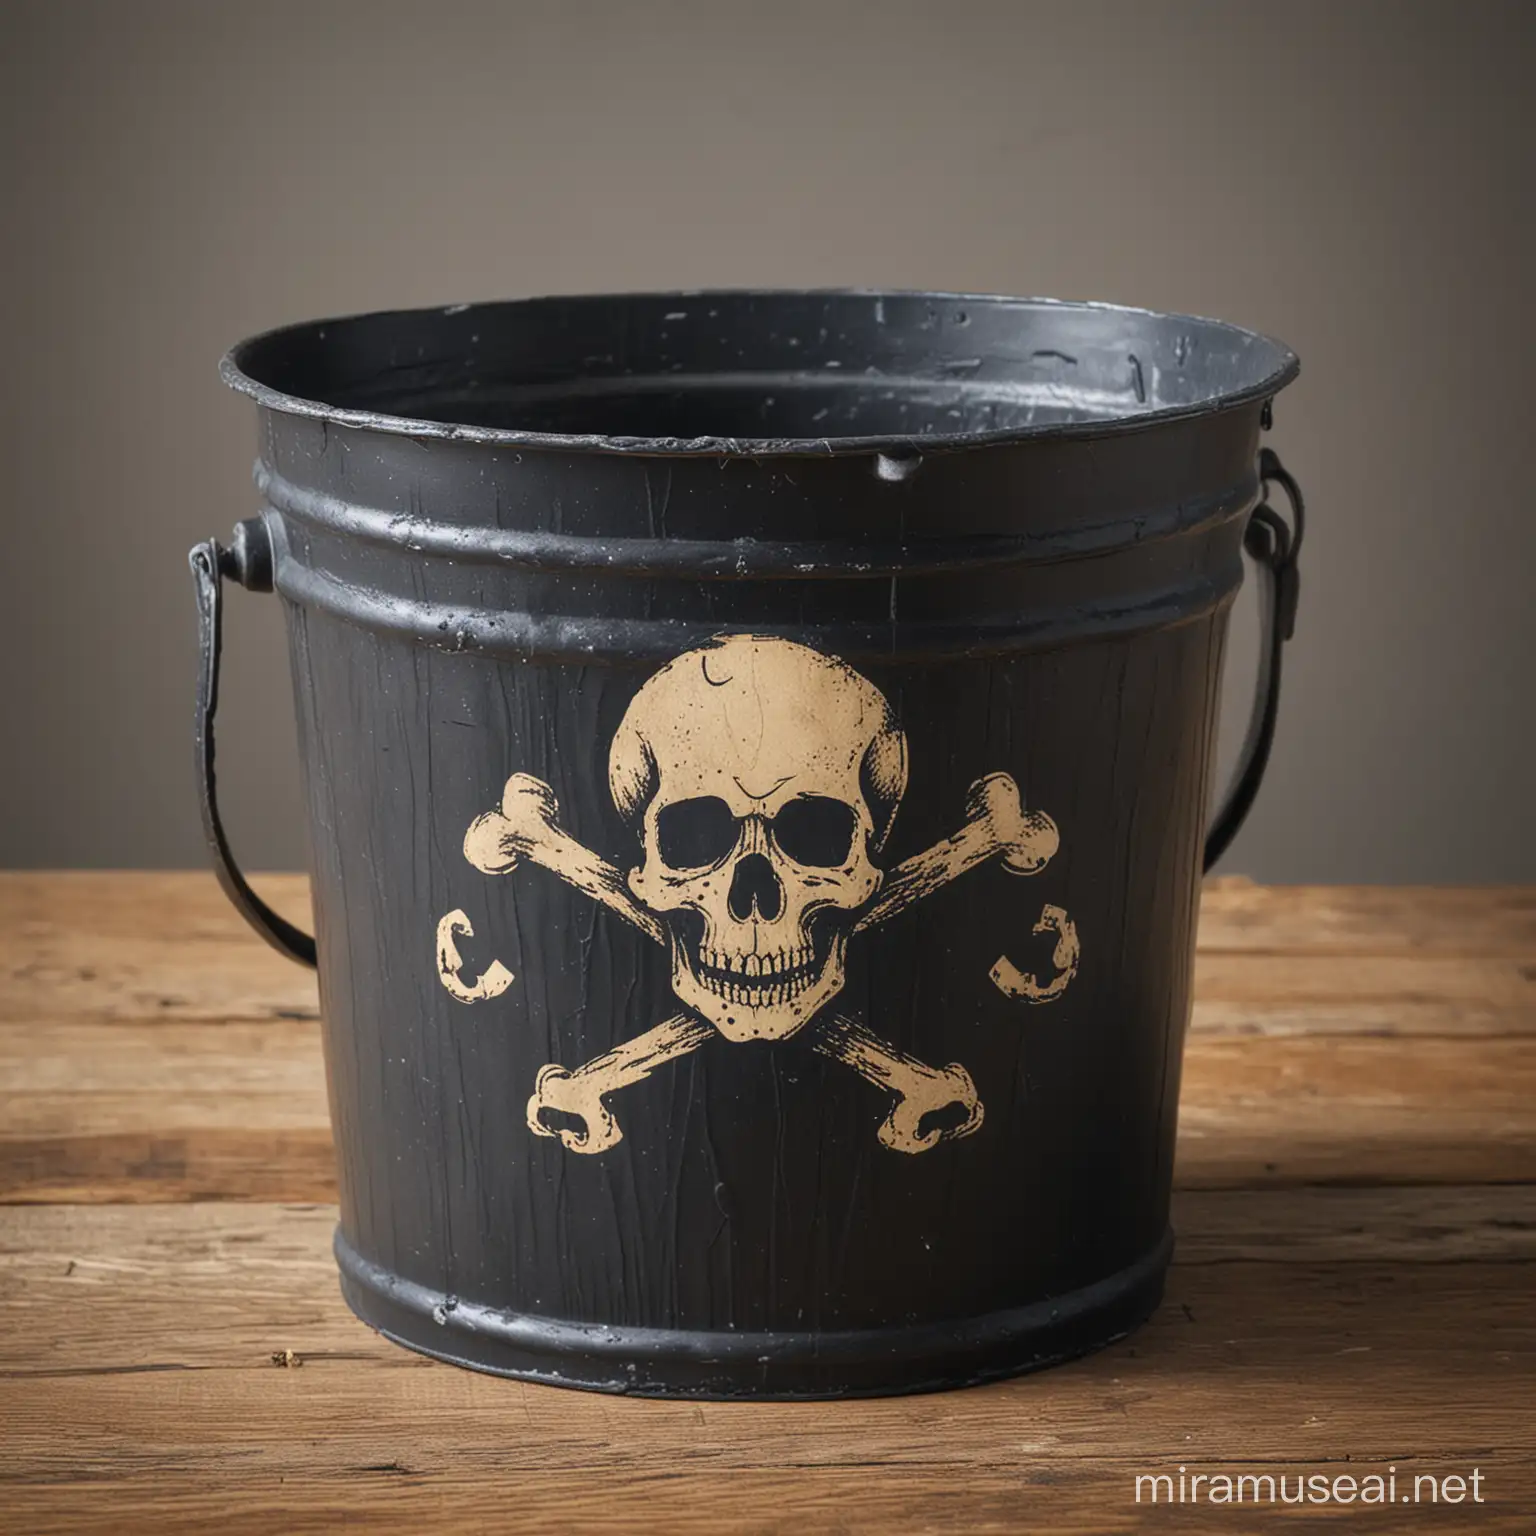 bucket with skull and bones